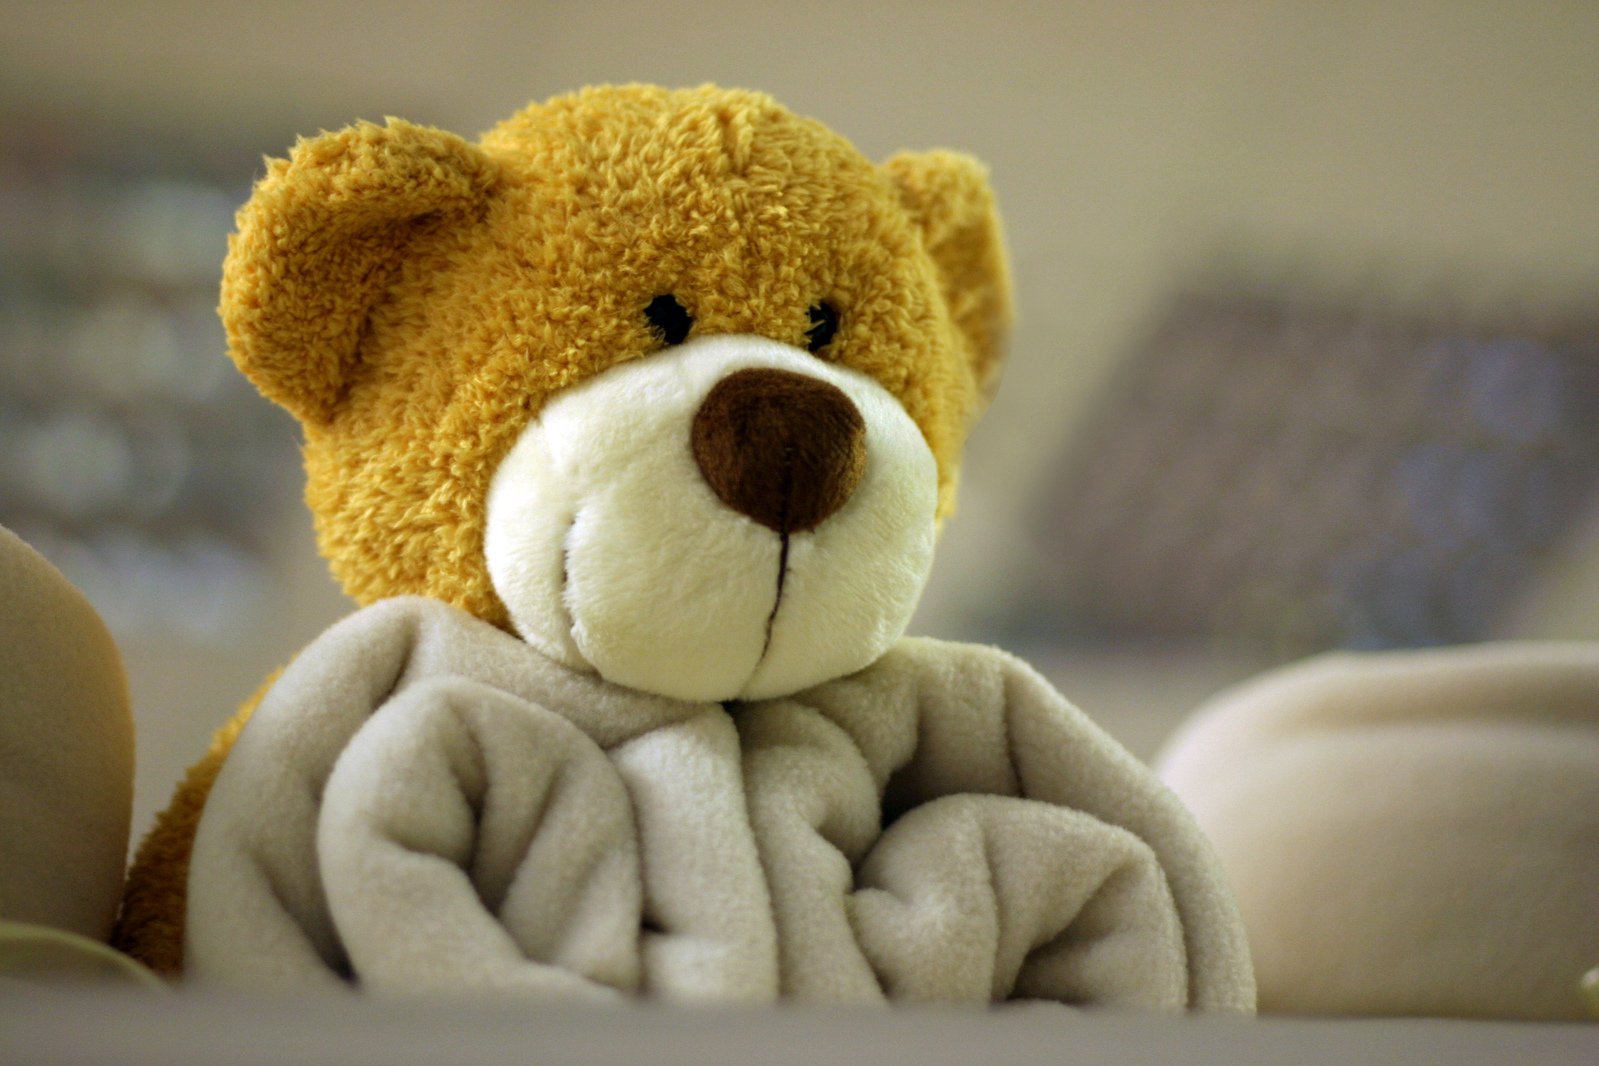 a teddy bear is wrapped in a blanket